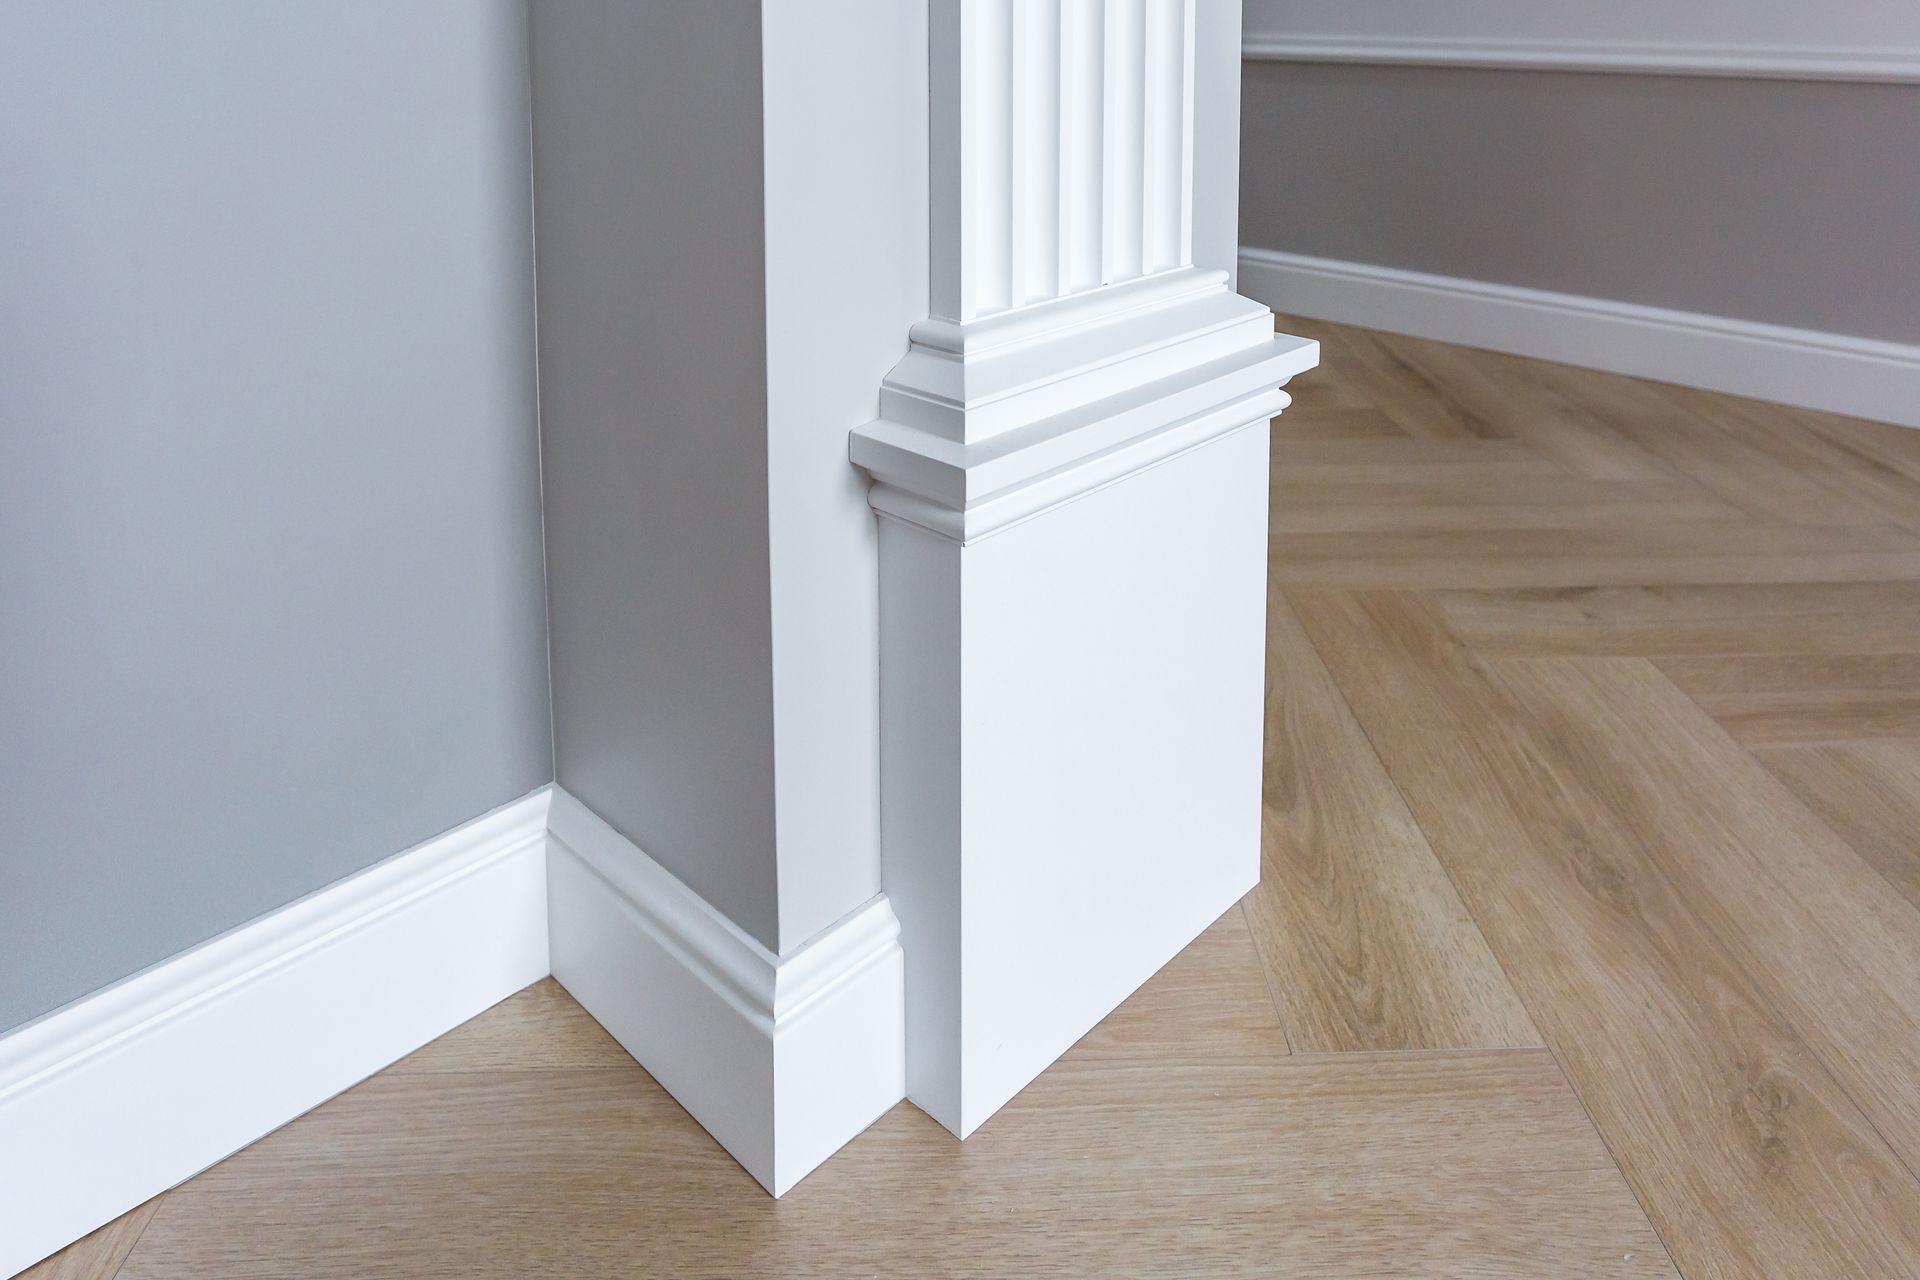 custom white trim with wooden floors